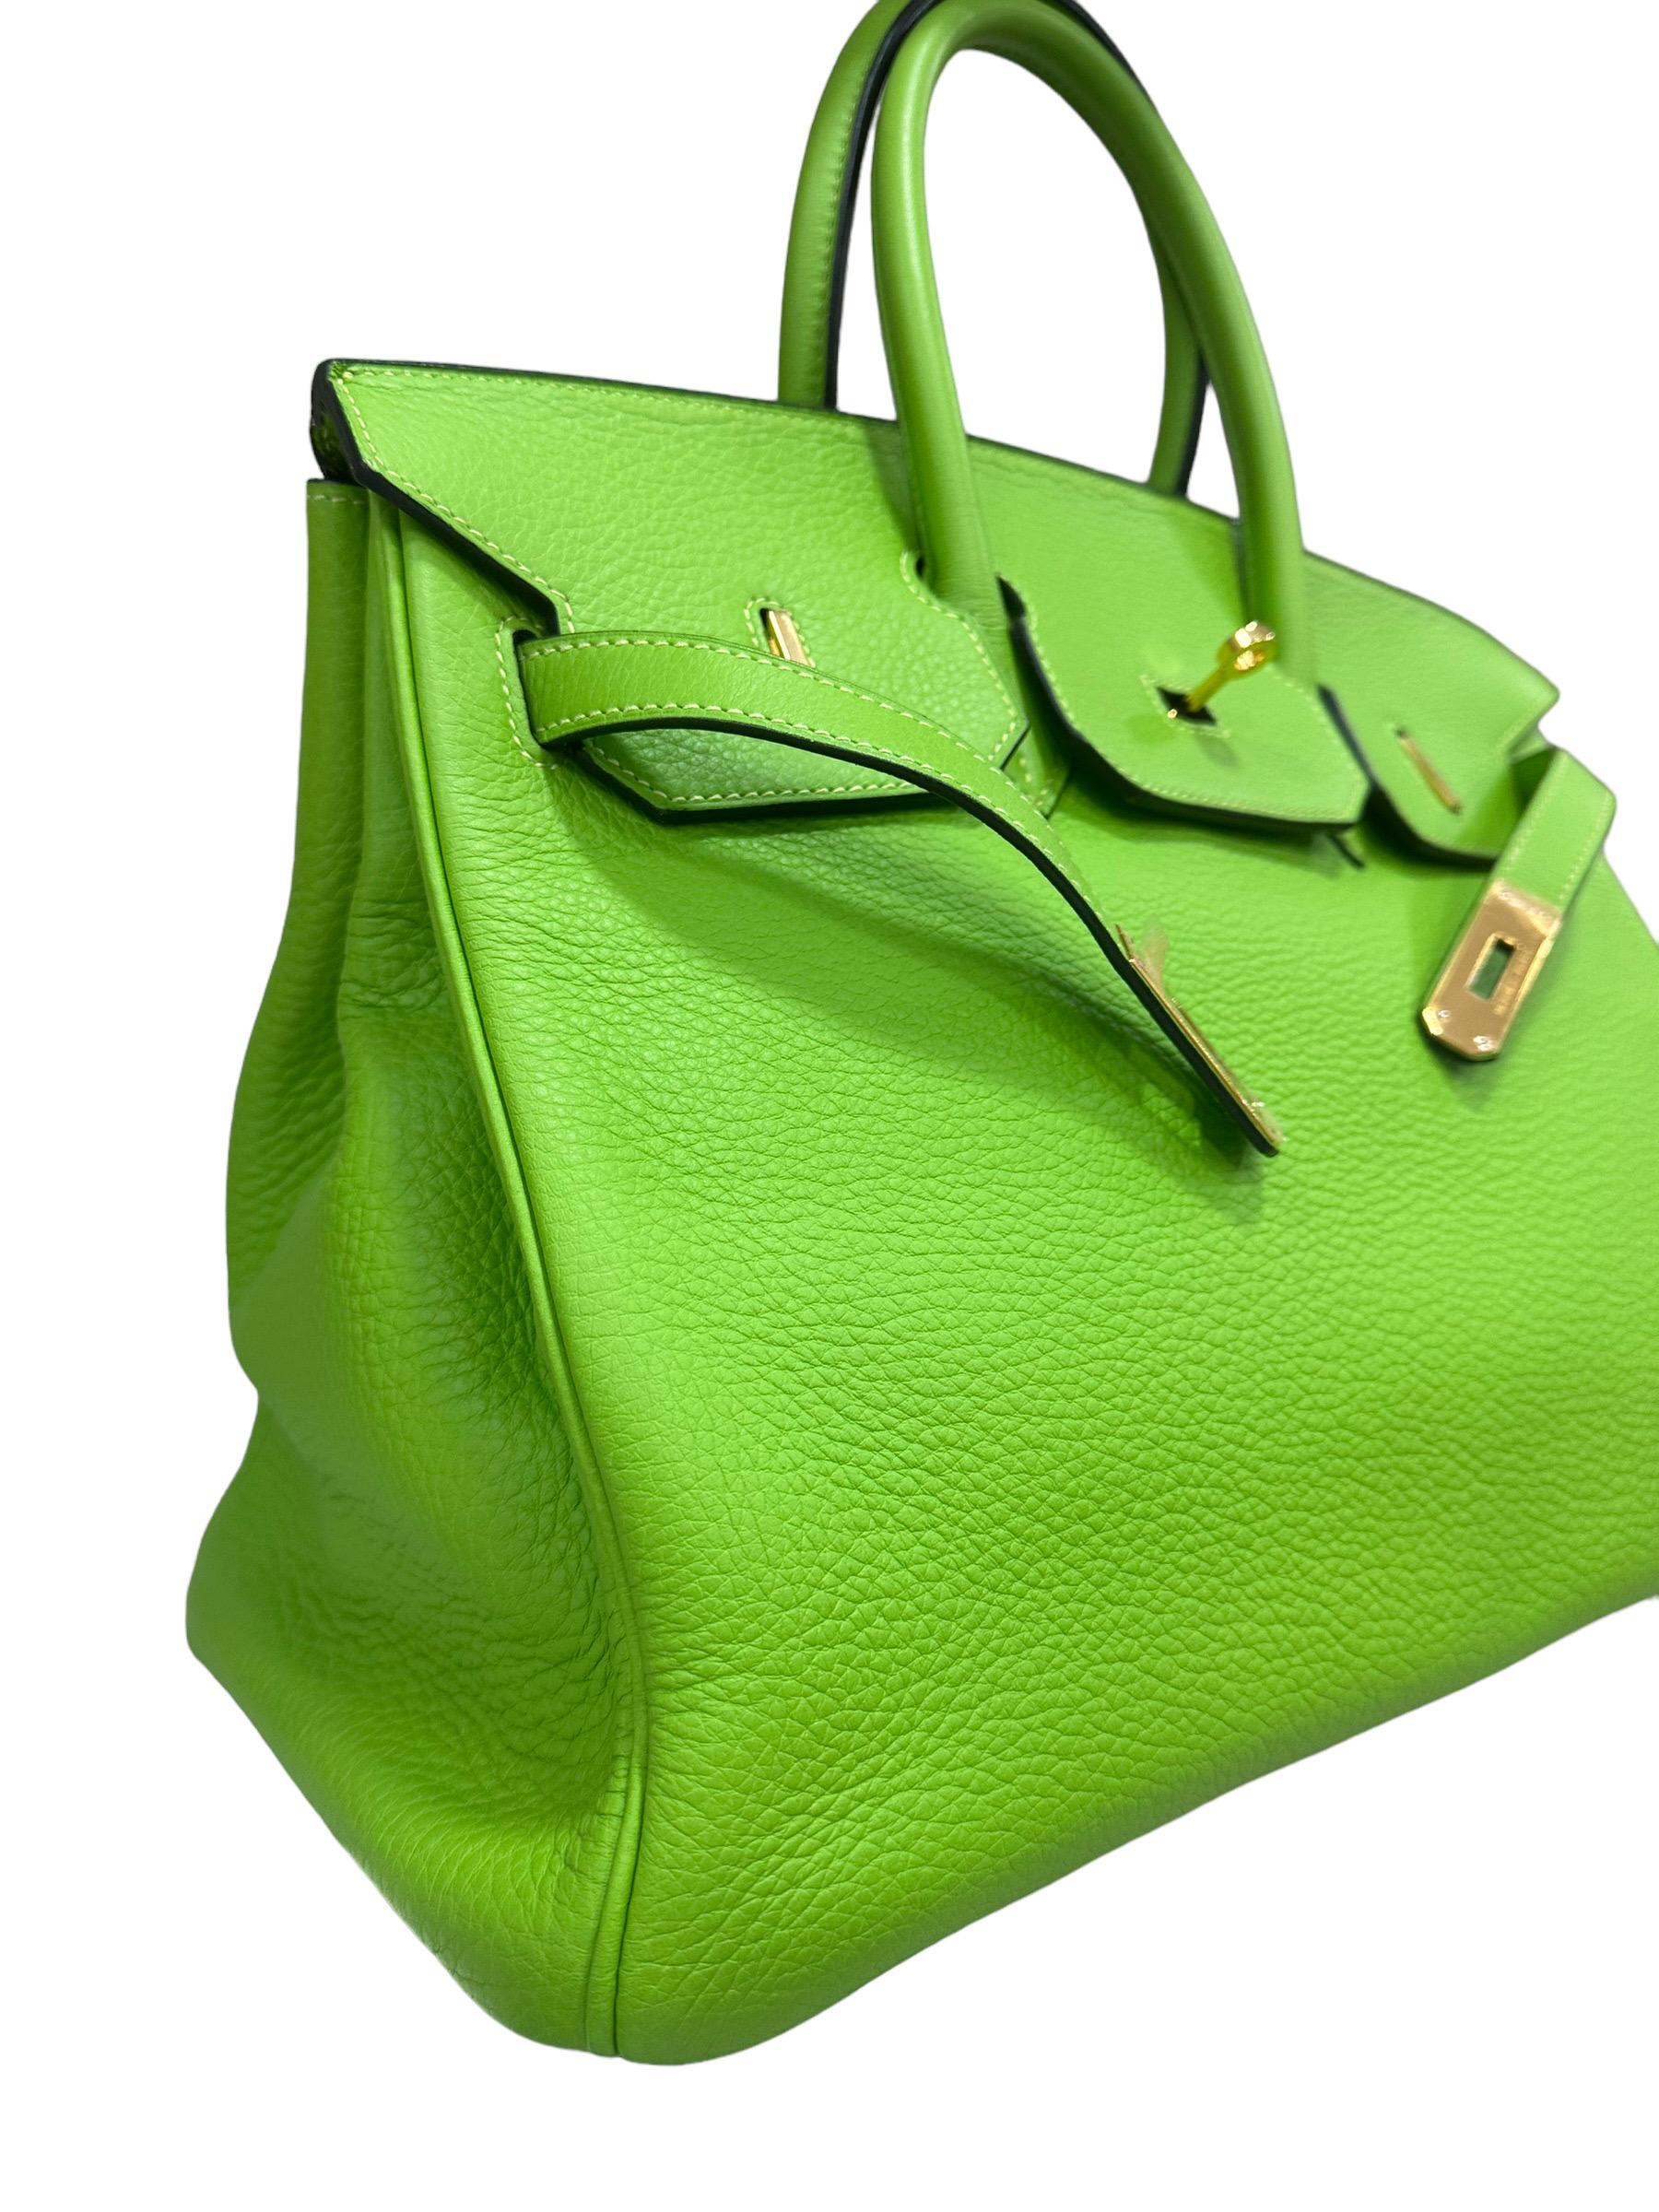 2004 Hermès Birkin 35 Clemence Leather Green Apple Top Handle Bag 7